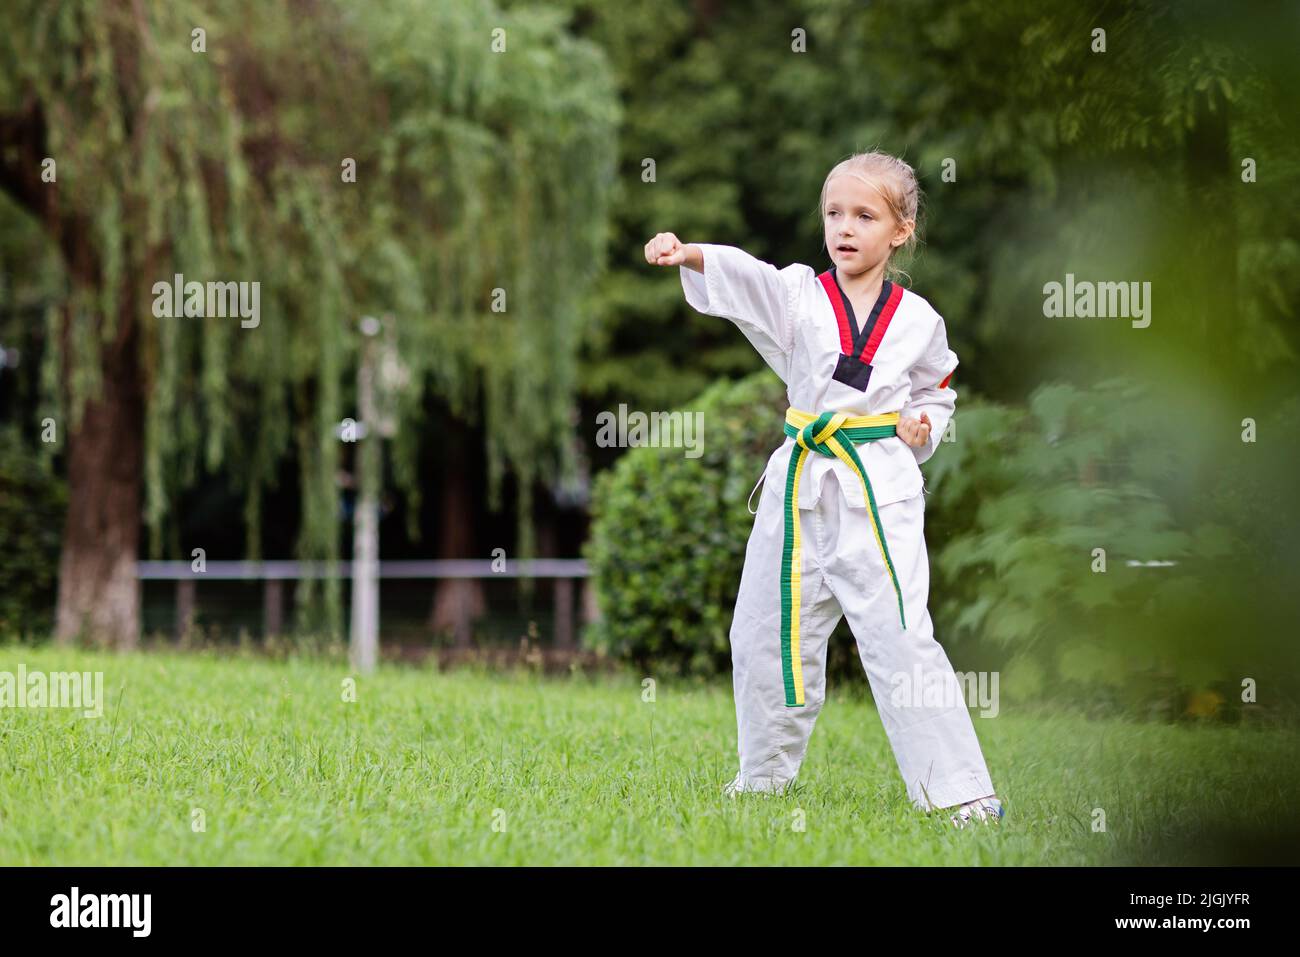 todos los días Abstracción diferente a Cinturón de taekwondo fotografías e imágenes de alta resolución - Página 2  - Alamy